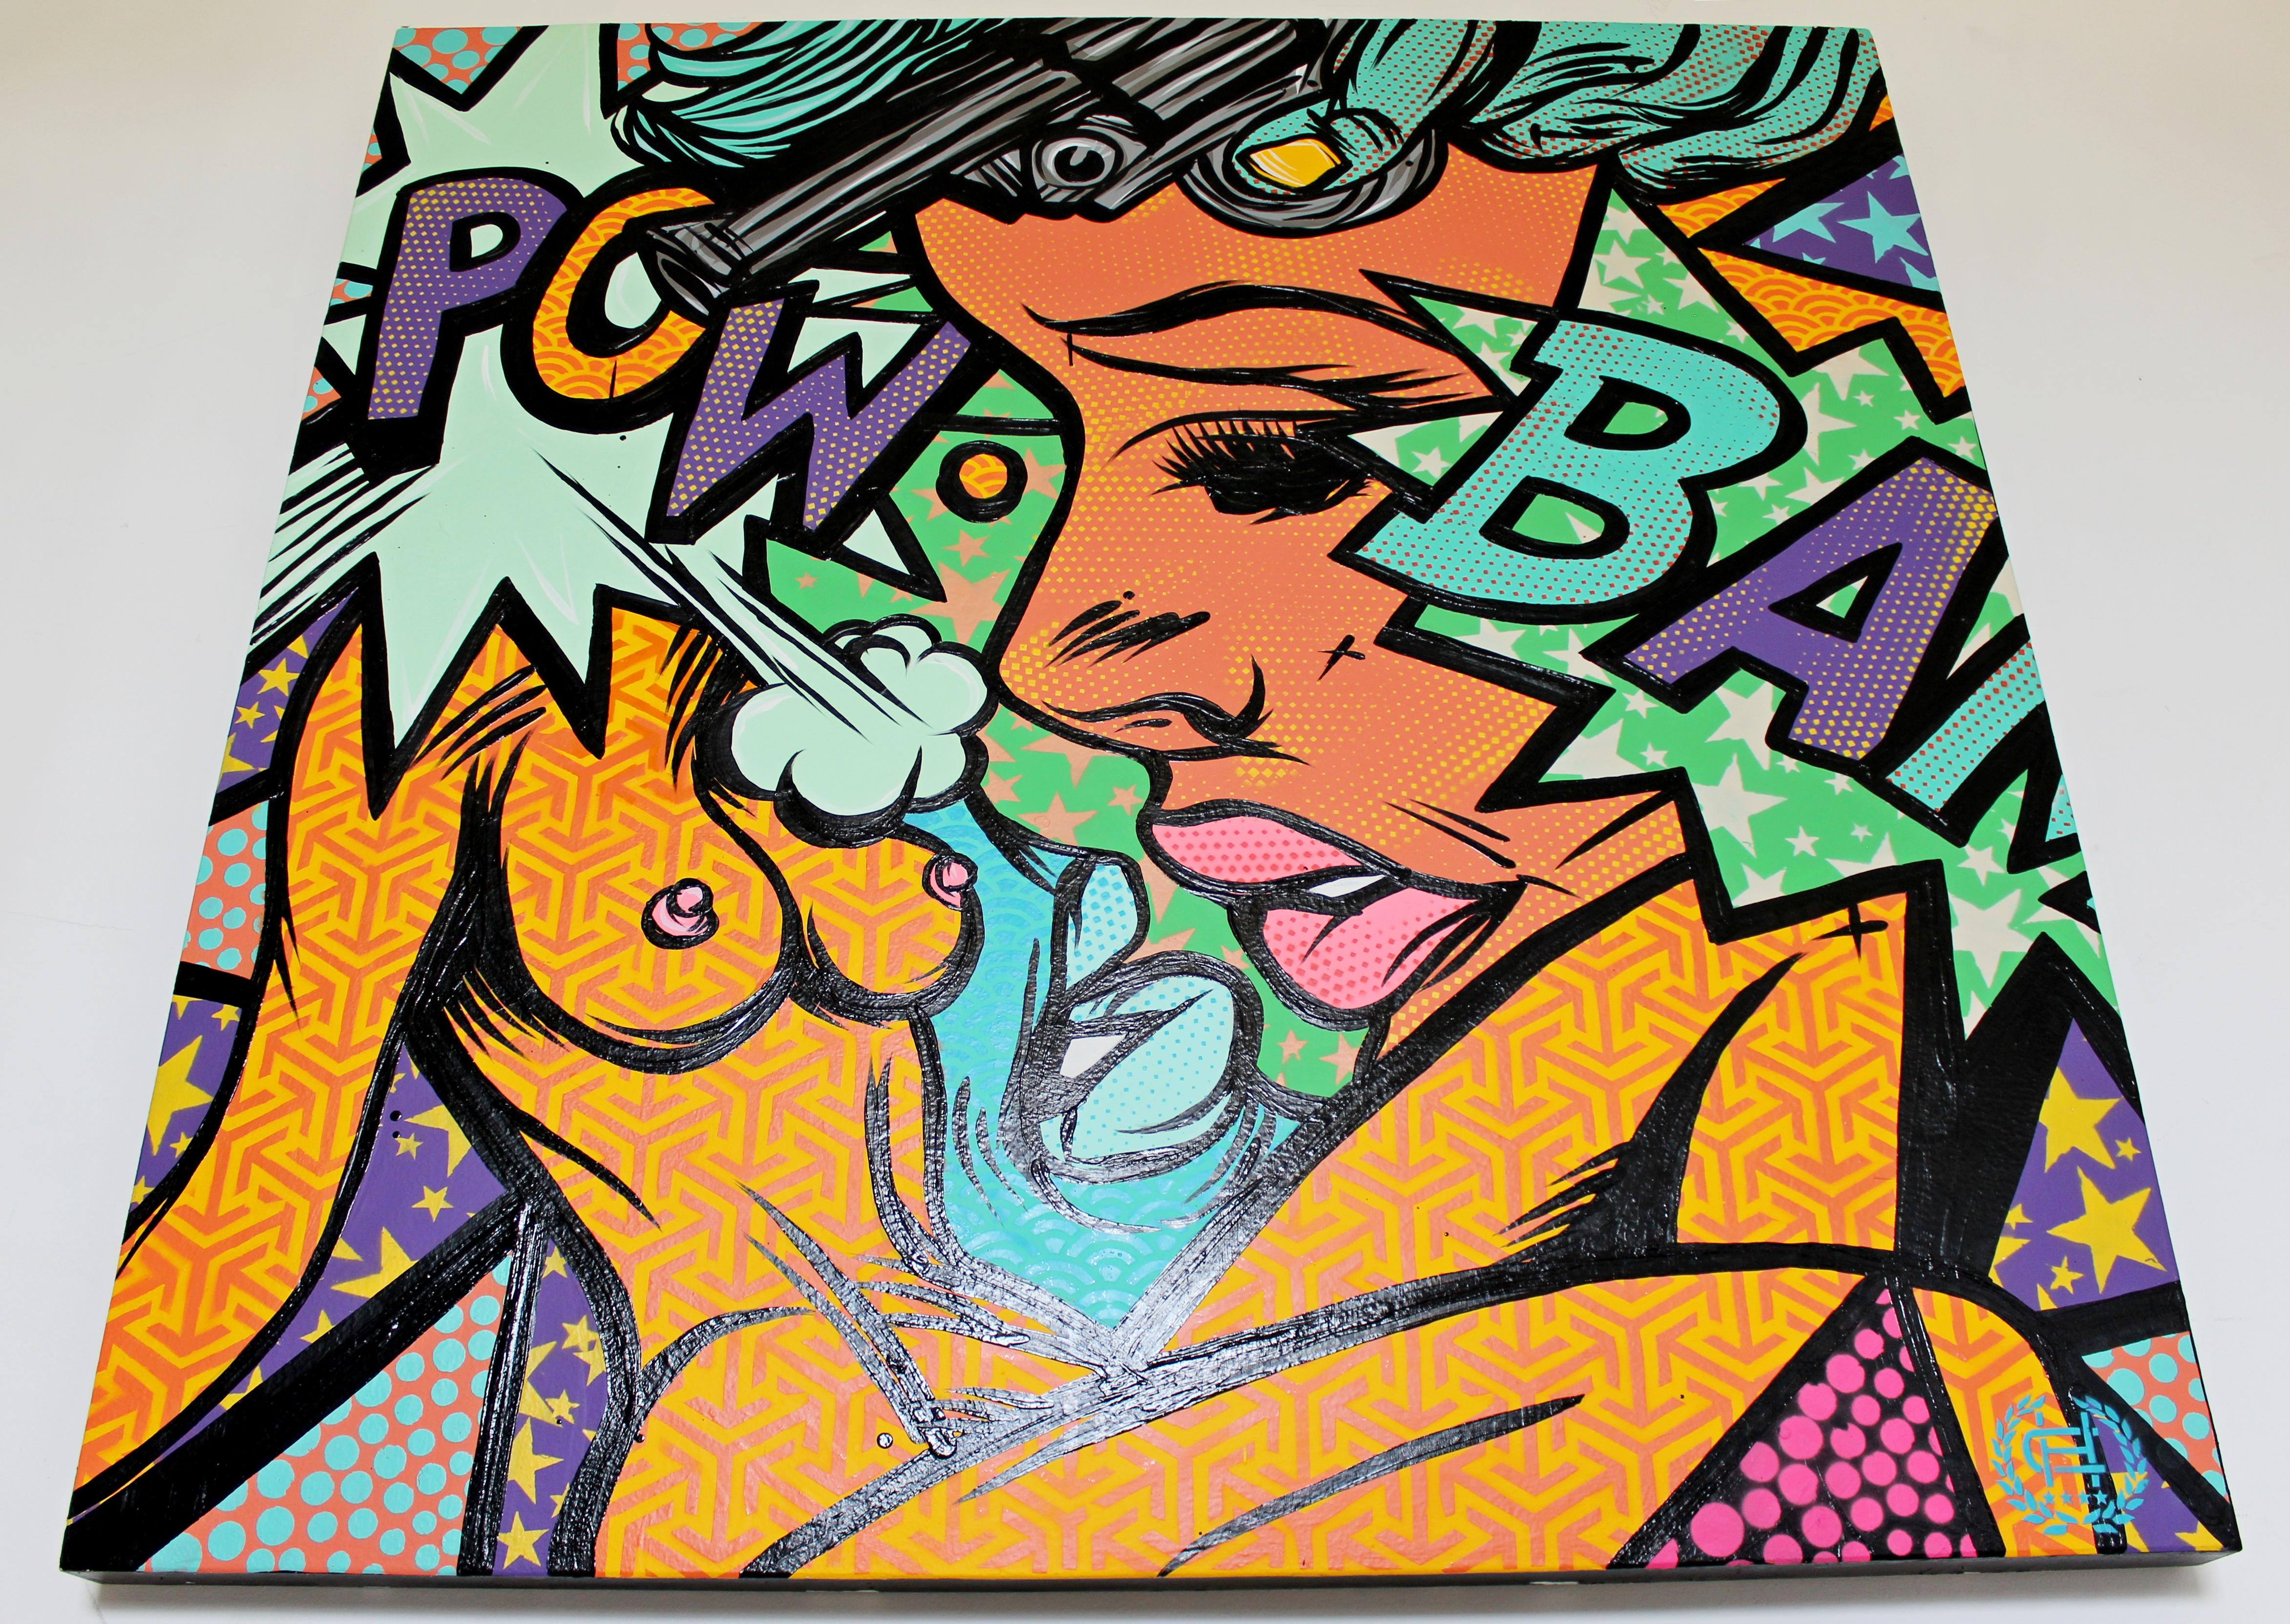 Contemporary Modernist Pop Graphic Art Signed Chris Hobe Artrevolt, Dated 2015 2